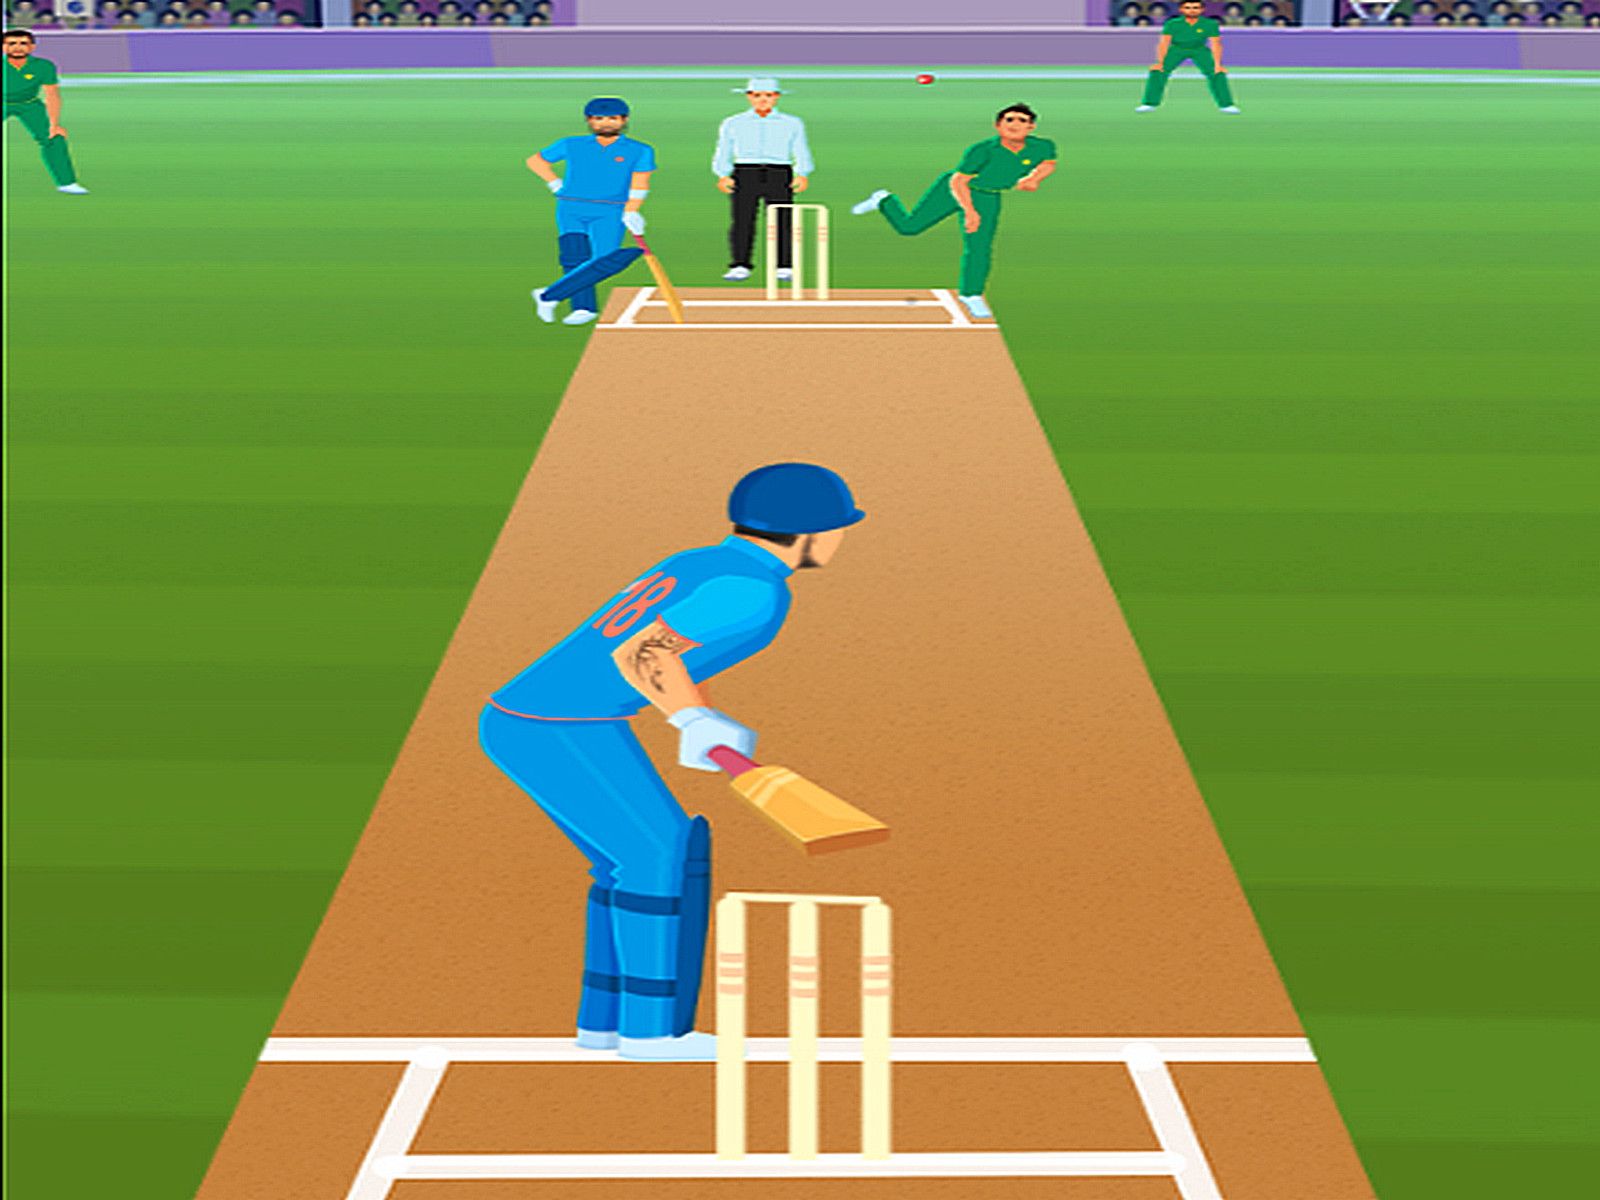 भारतीय क्रिकेटका प्रशिक्षक द्रविडसँग सम्झौता नवीकरण